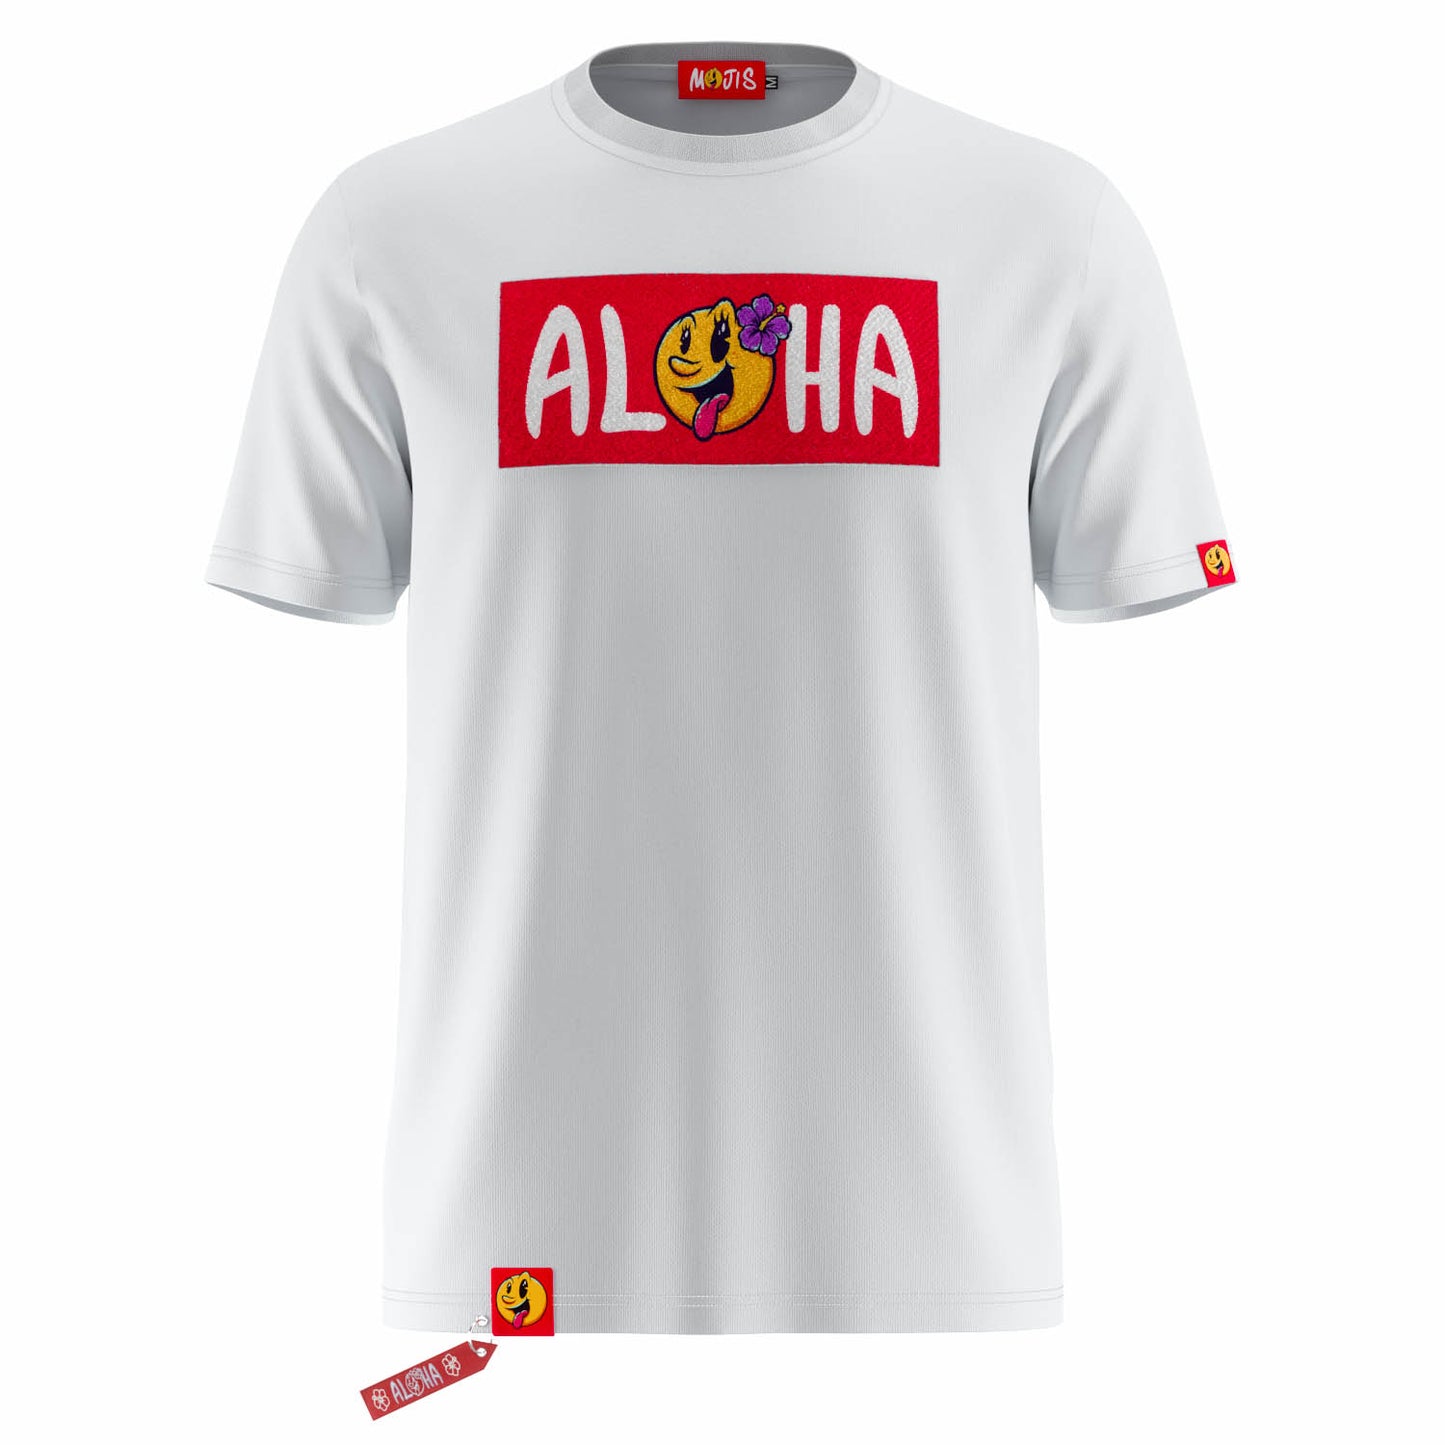 Aloha Signature T-Shirt